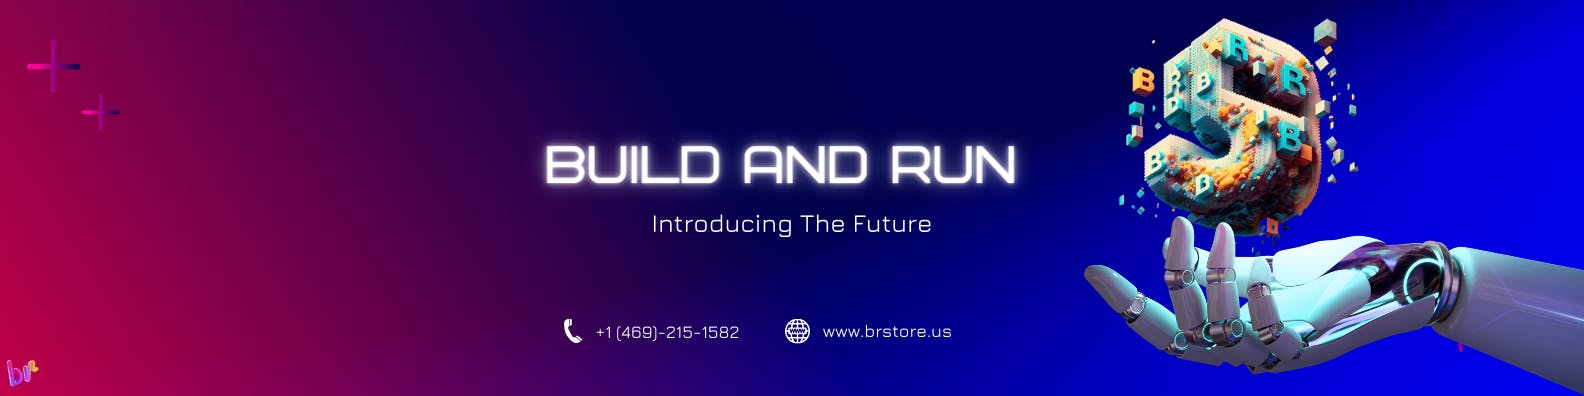 Build and Run media 1